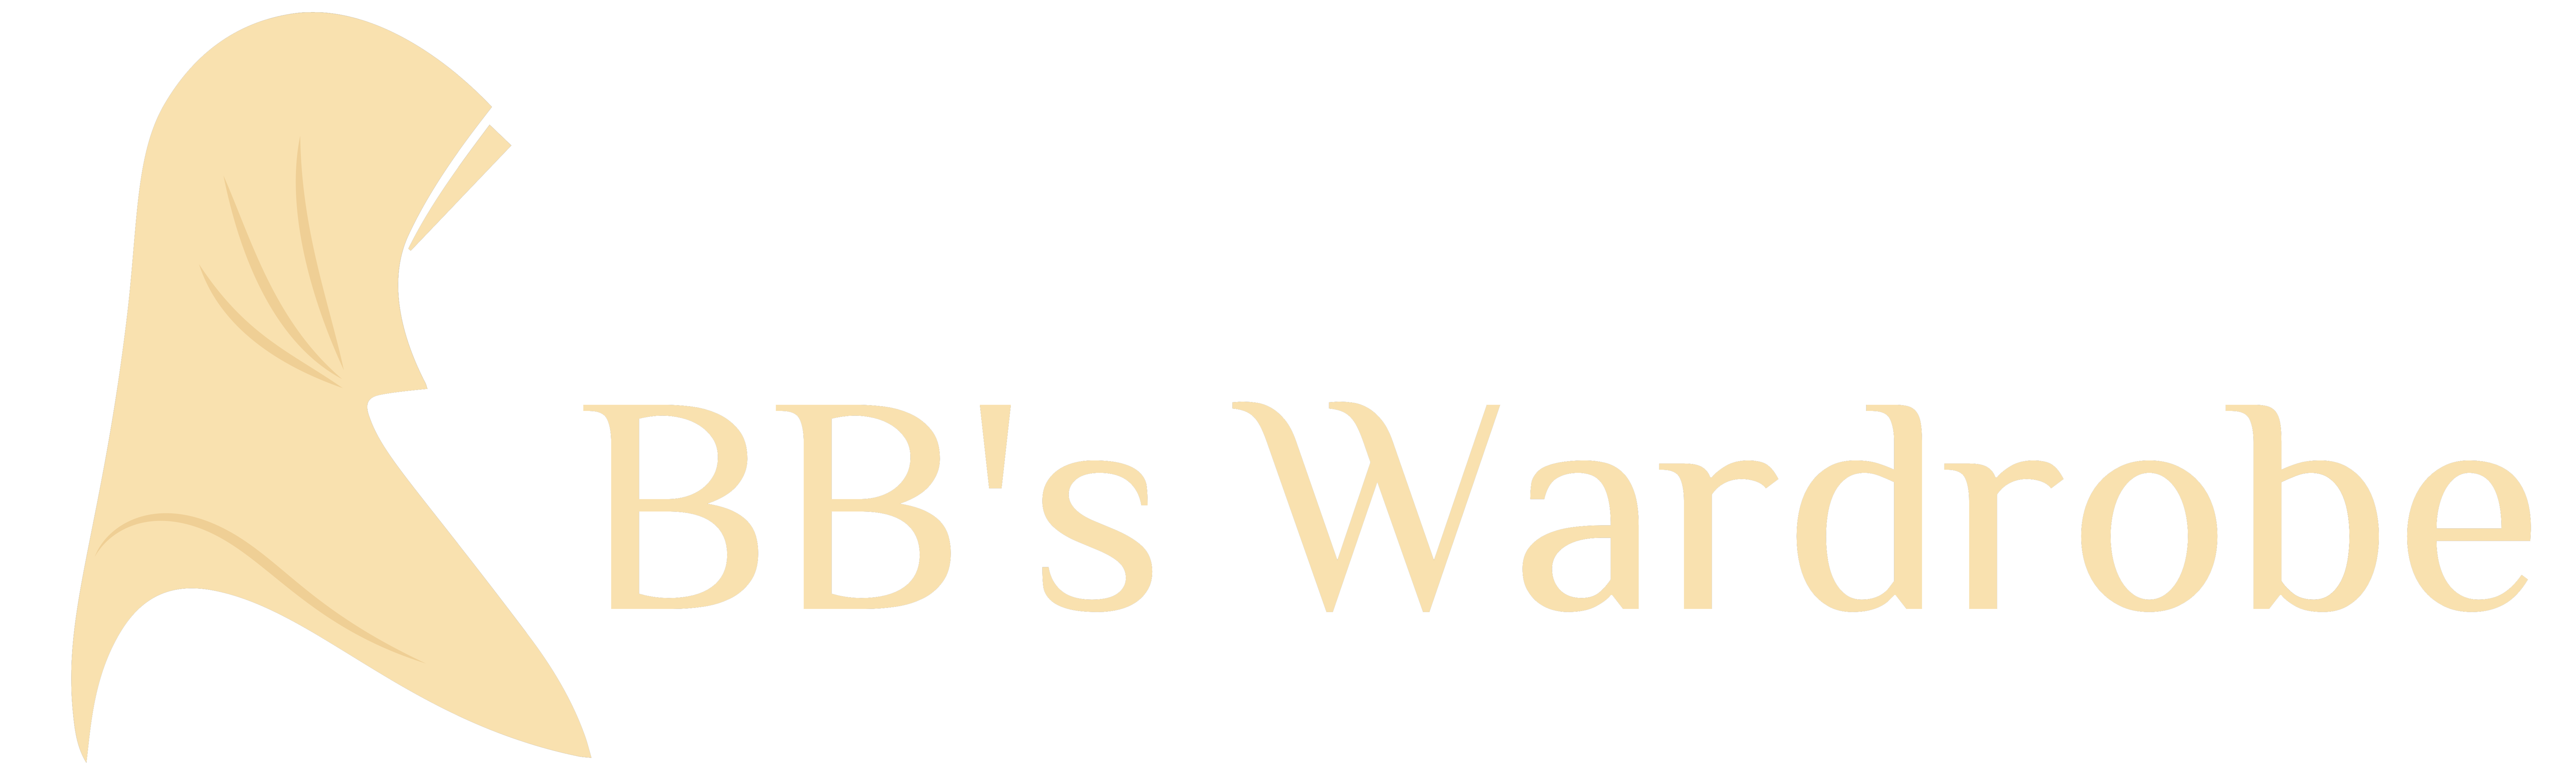 BB's Wardrobe